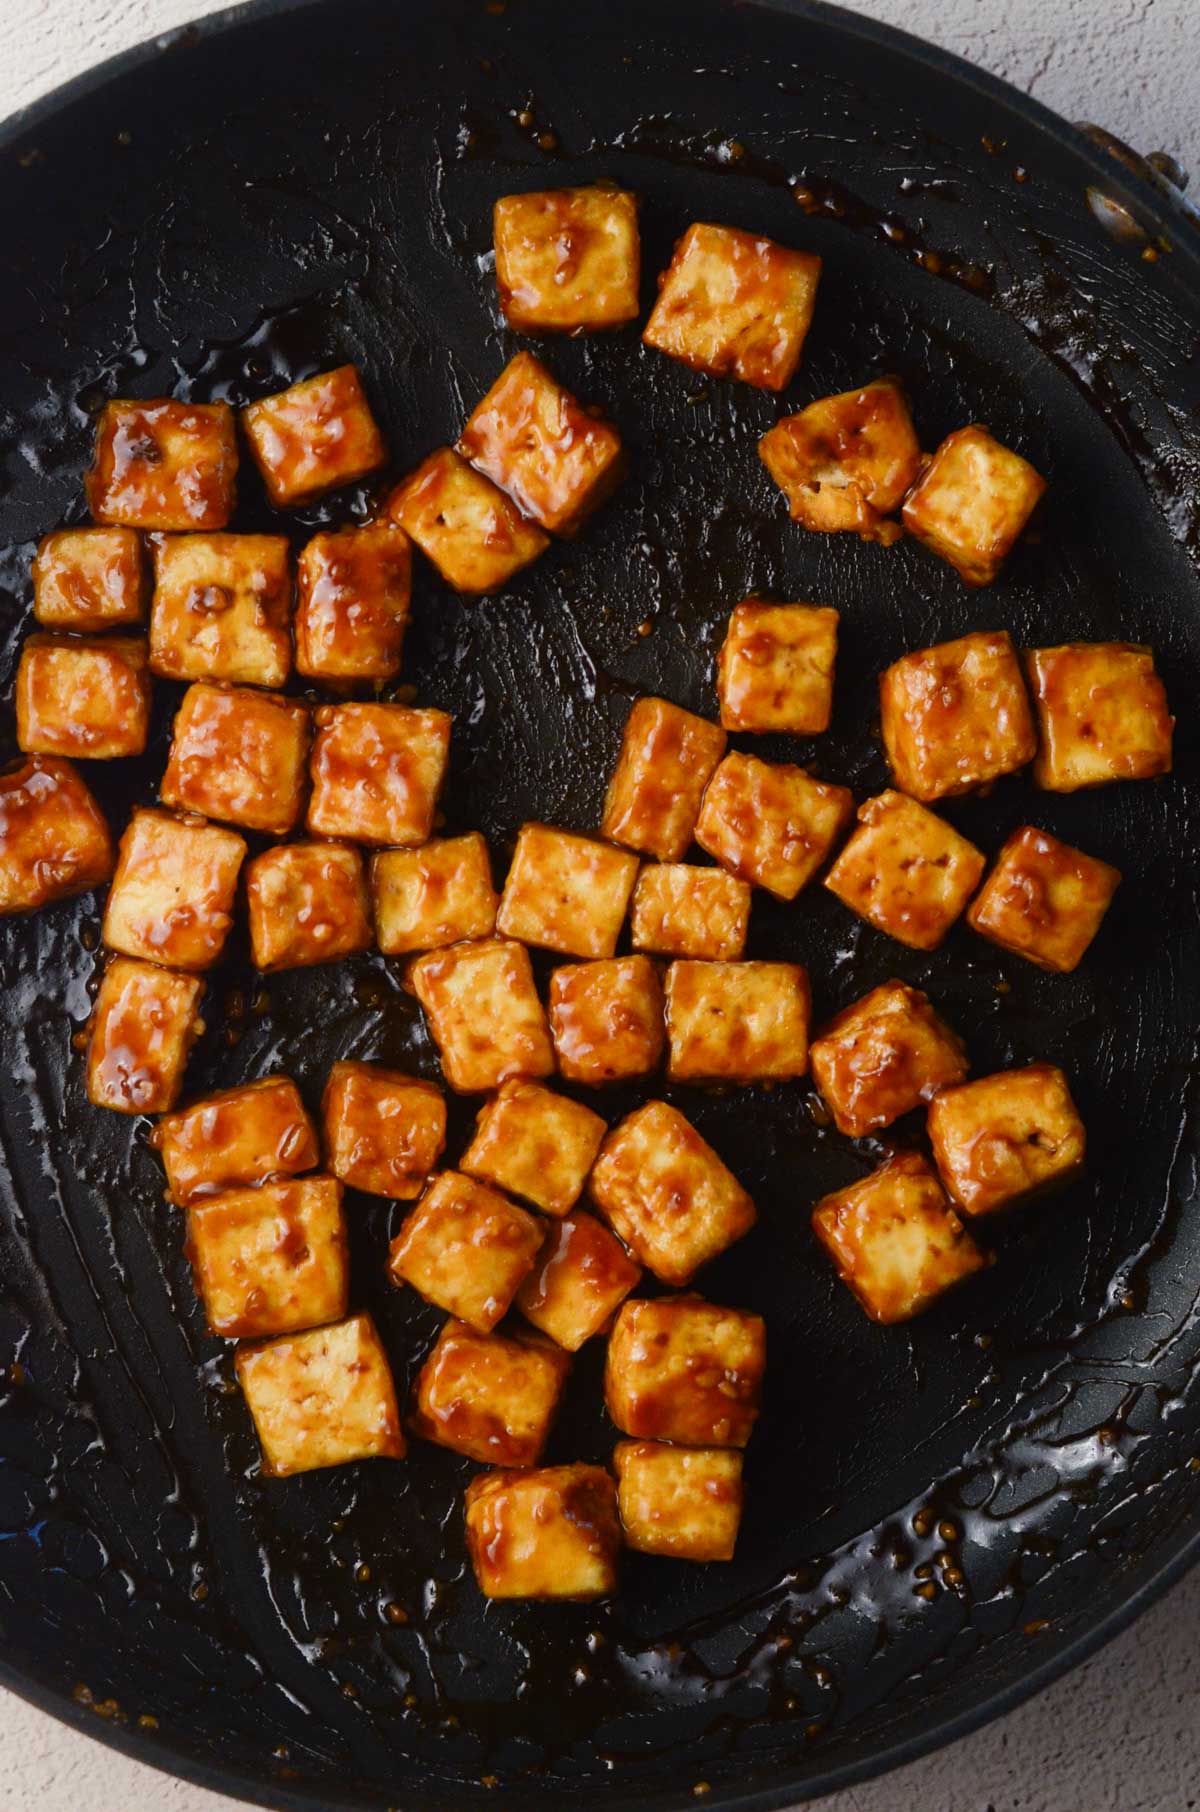 Crispy Air Fryer Asian Tofu and Broccoli - Kitschen Cat